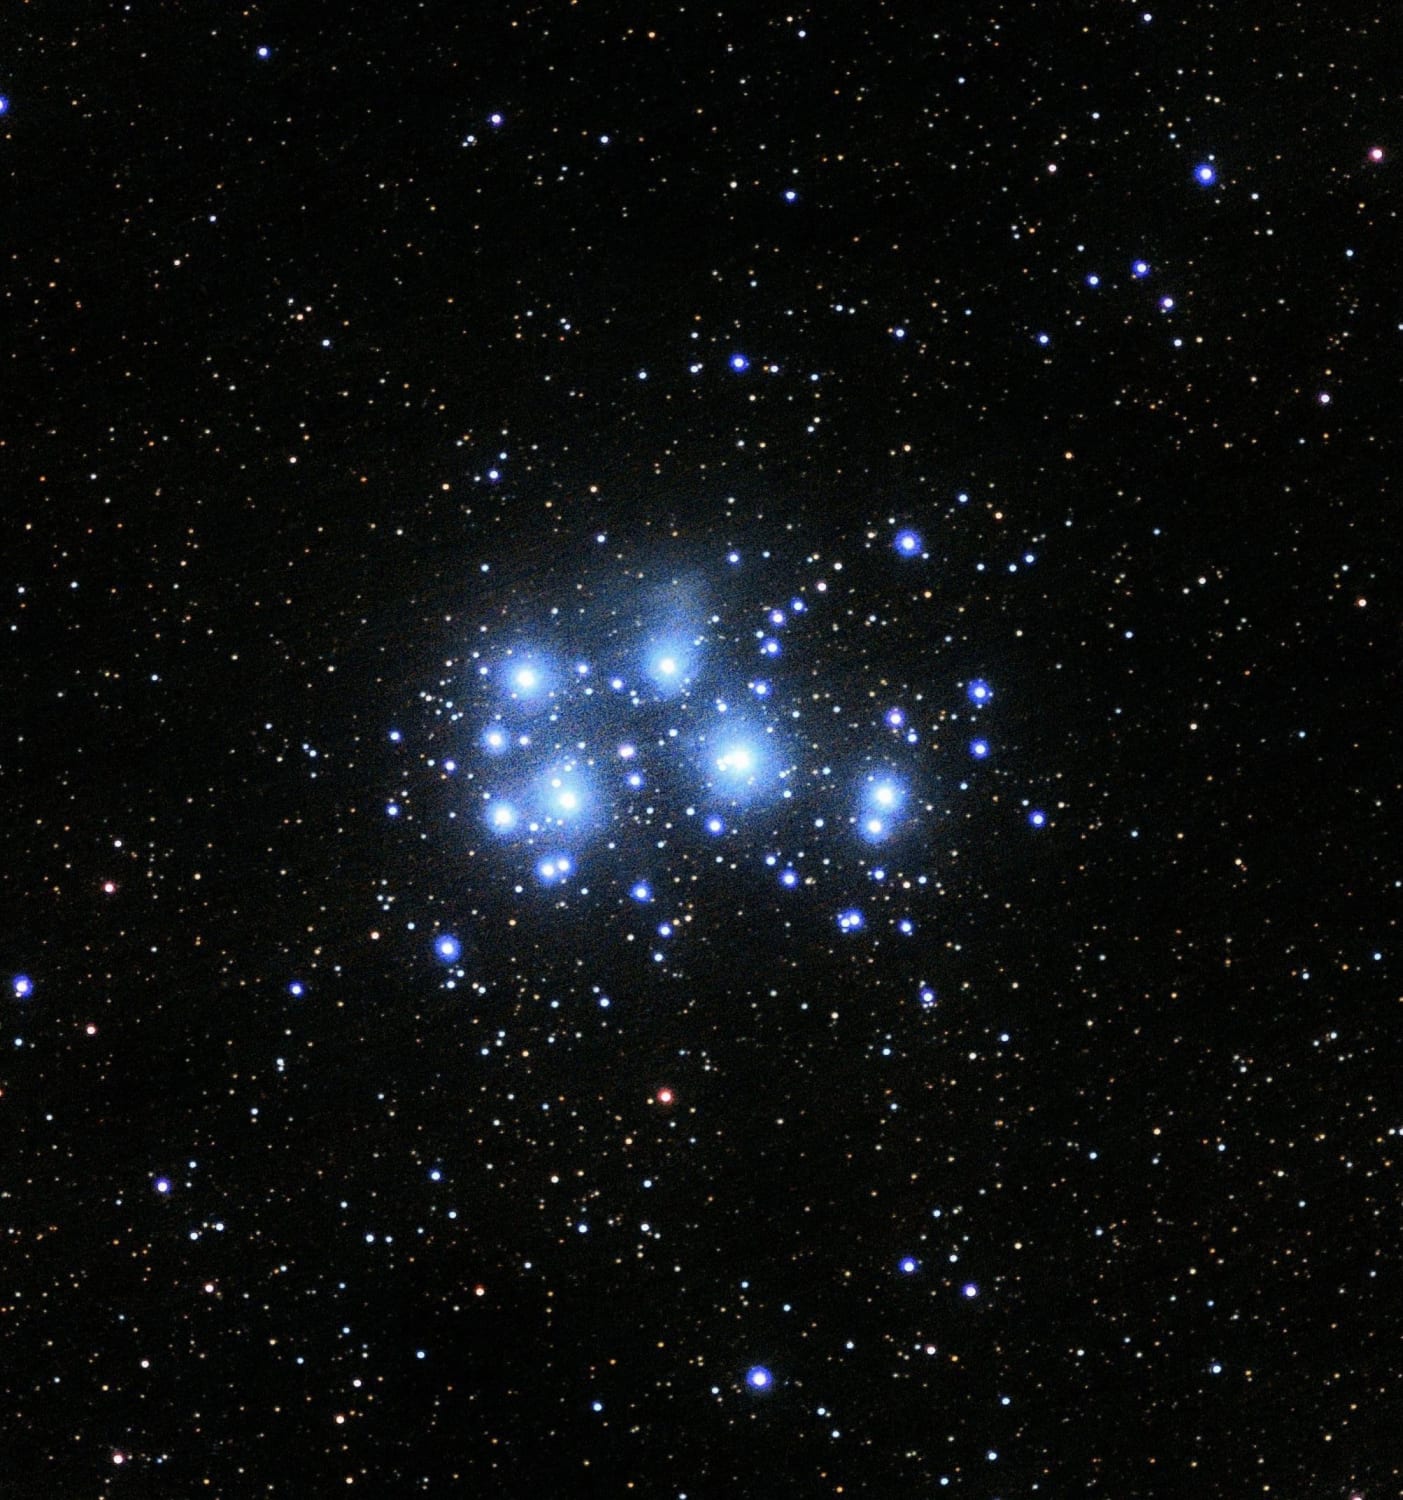 The company’s namesake- the Pleiades star cluster